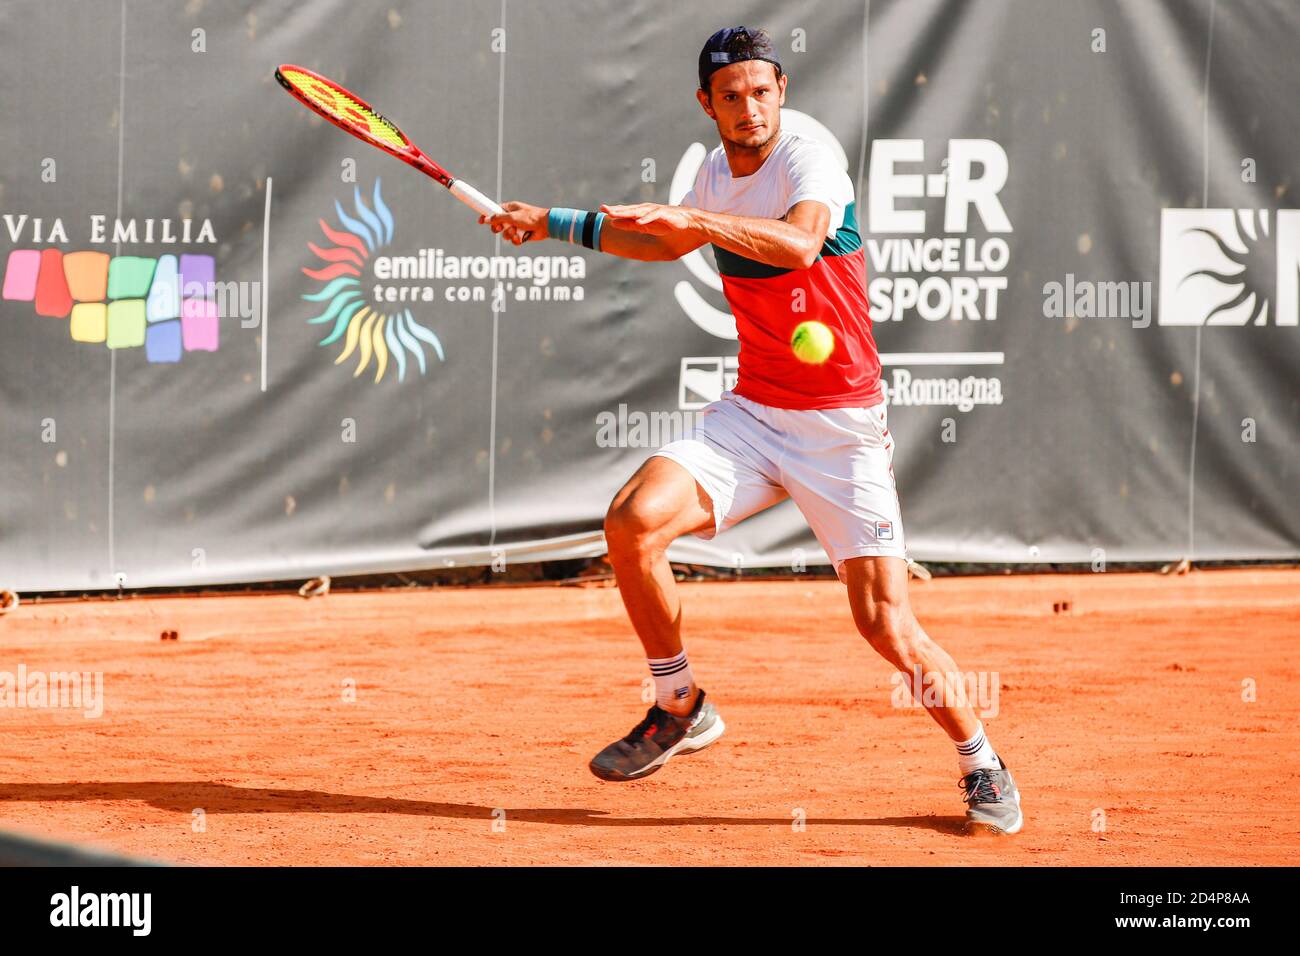 uan Pablo Ficovich during ATP Challenger 125 - Internazionali Emilia Romagna,  Tennis Internationals, parma, Italy, 09 Oct 2020 Credit: LM/Roberta Corr  Stock Photo - Alamy